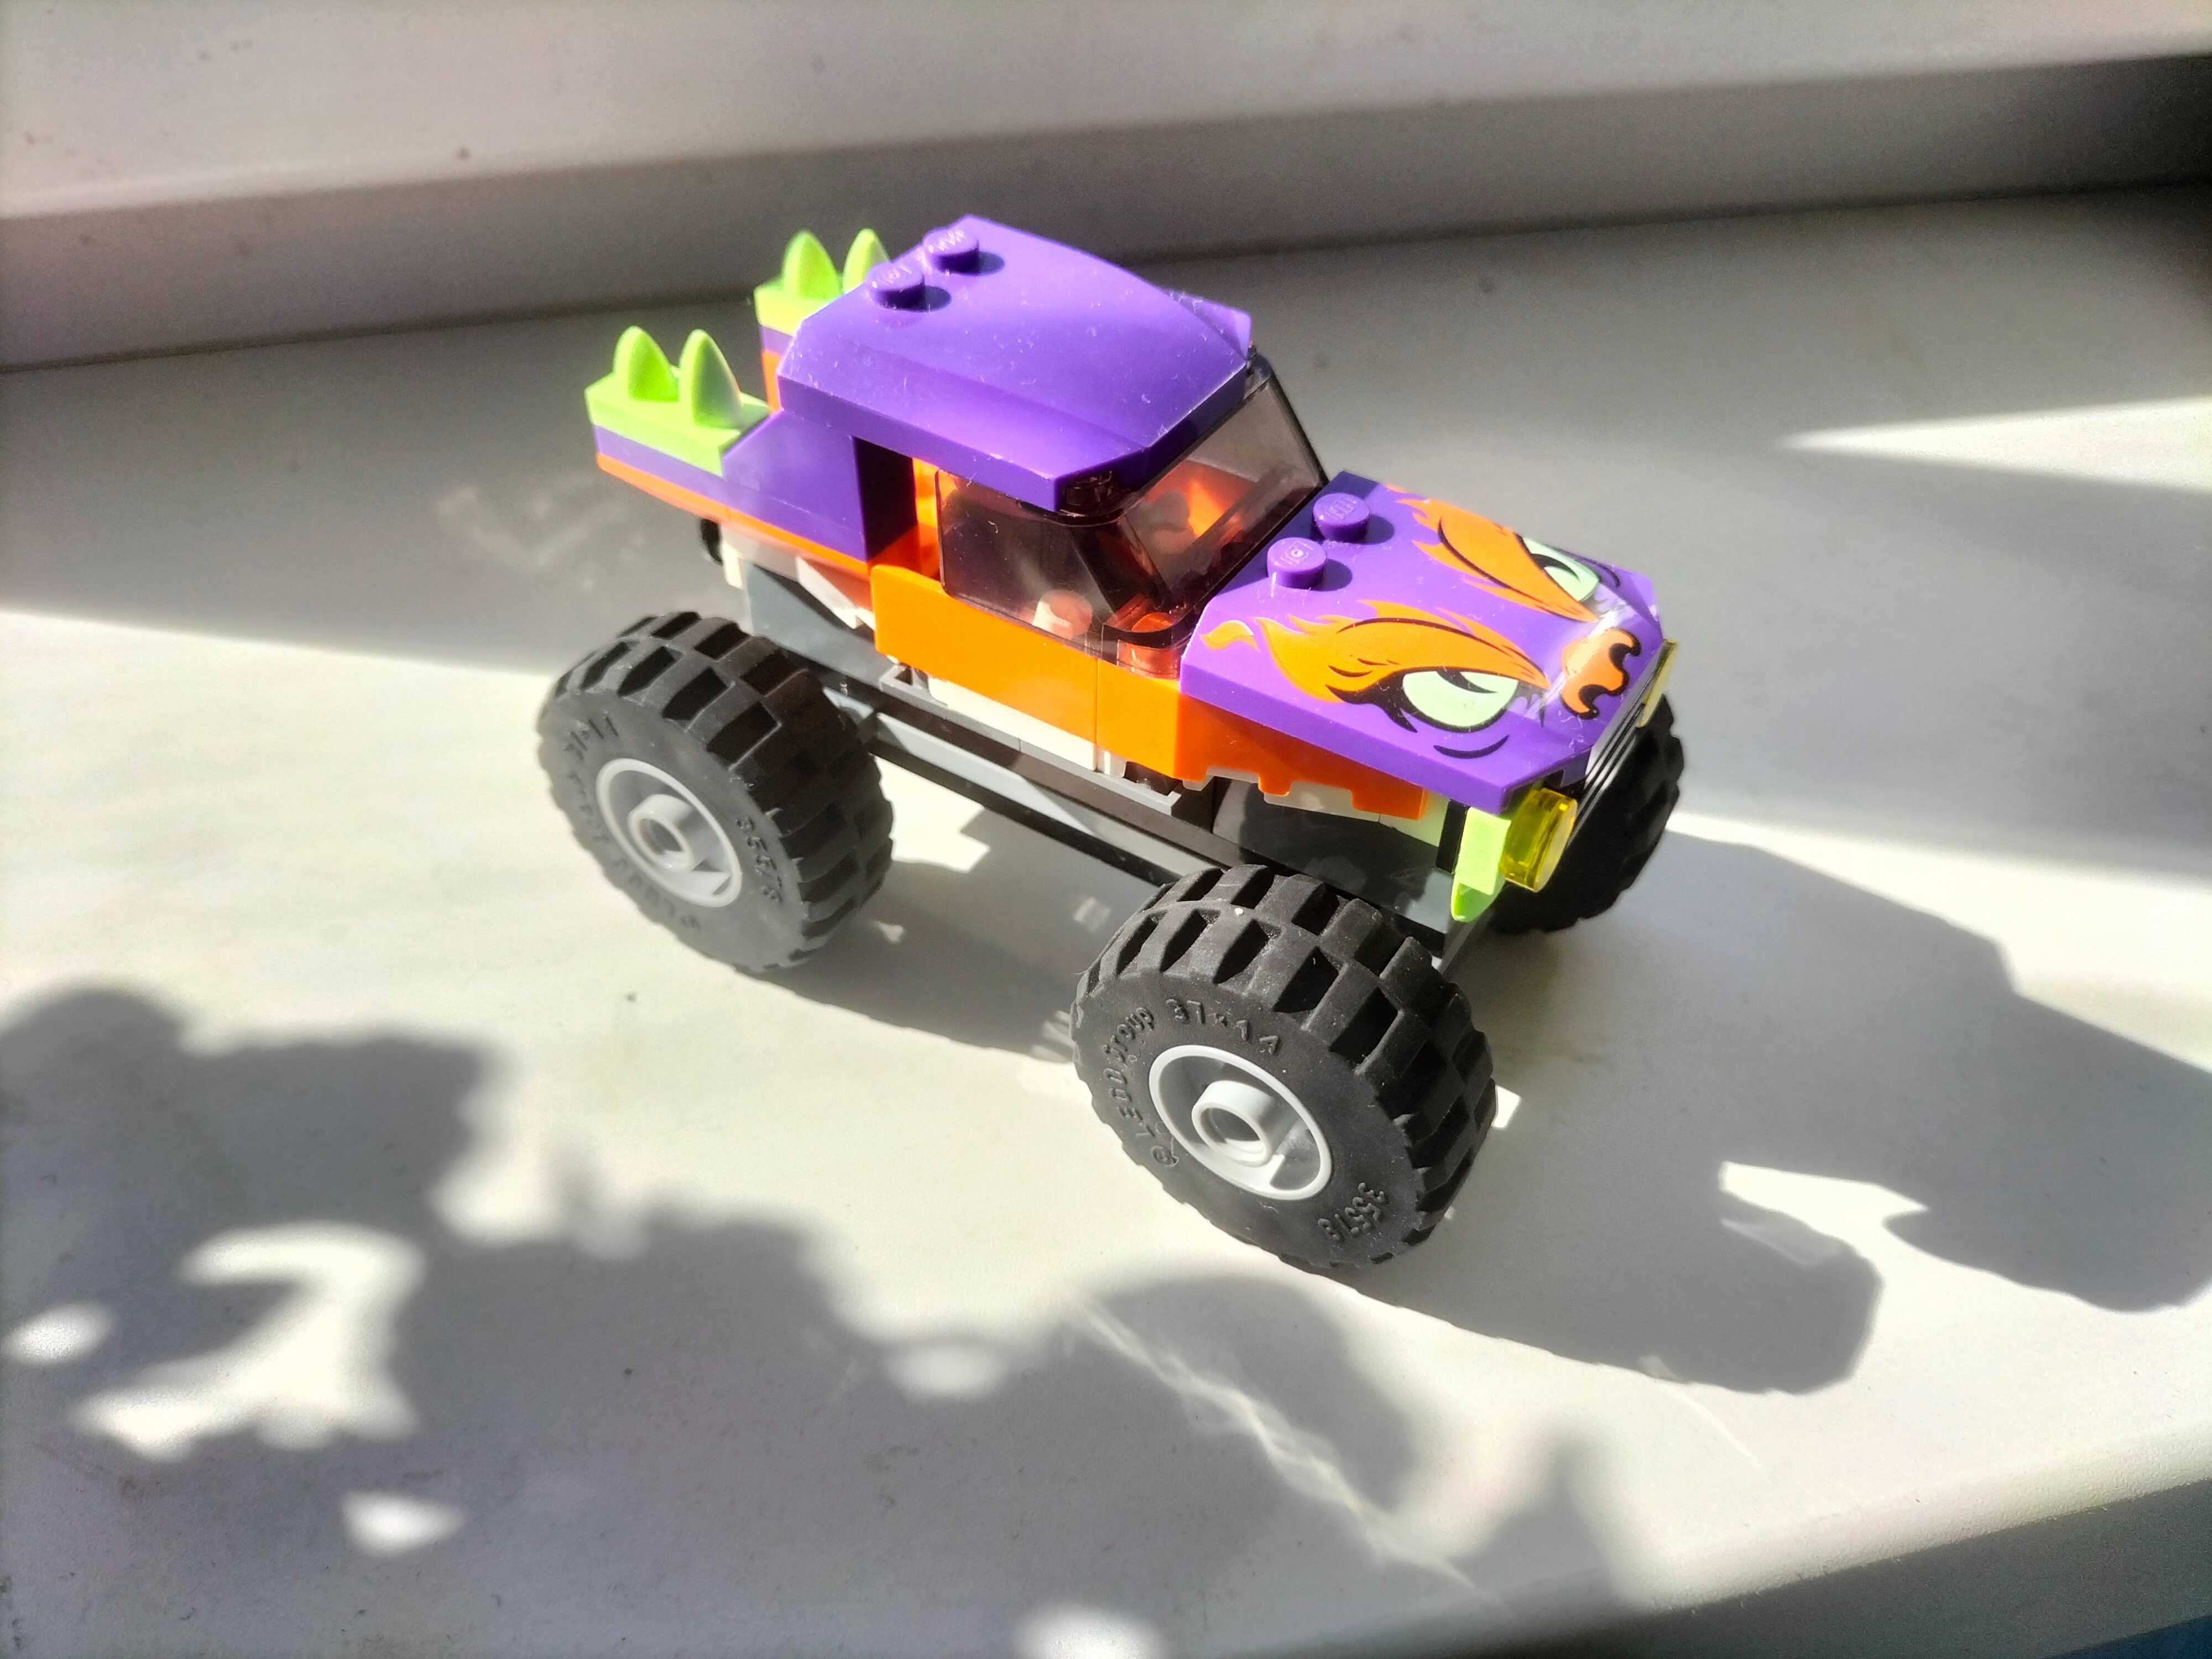 Конструктор LEGO City Вантажівка-монстр (60251) 5+